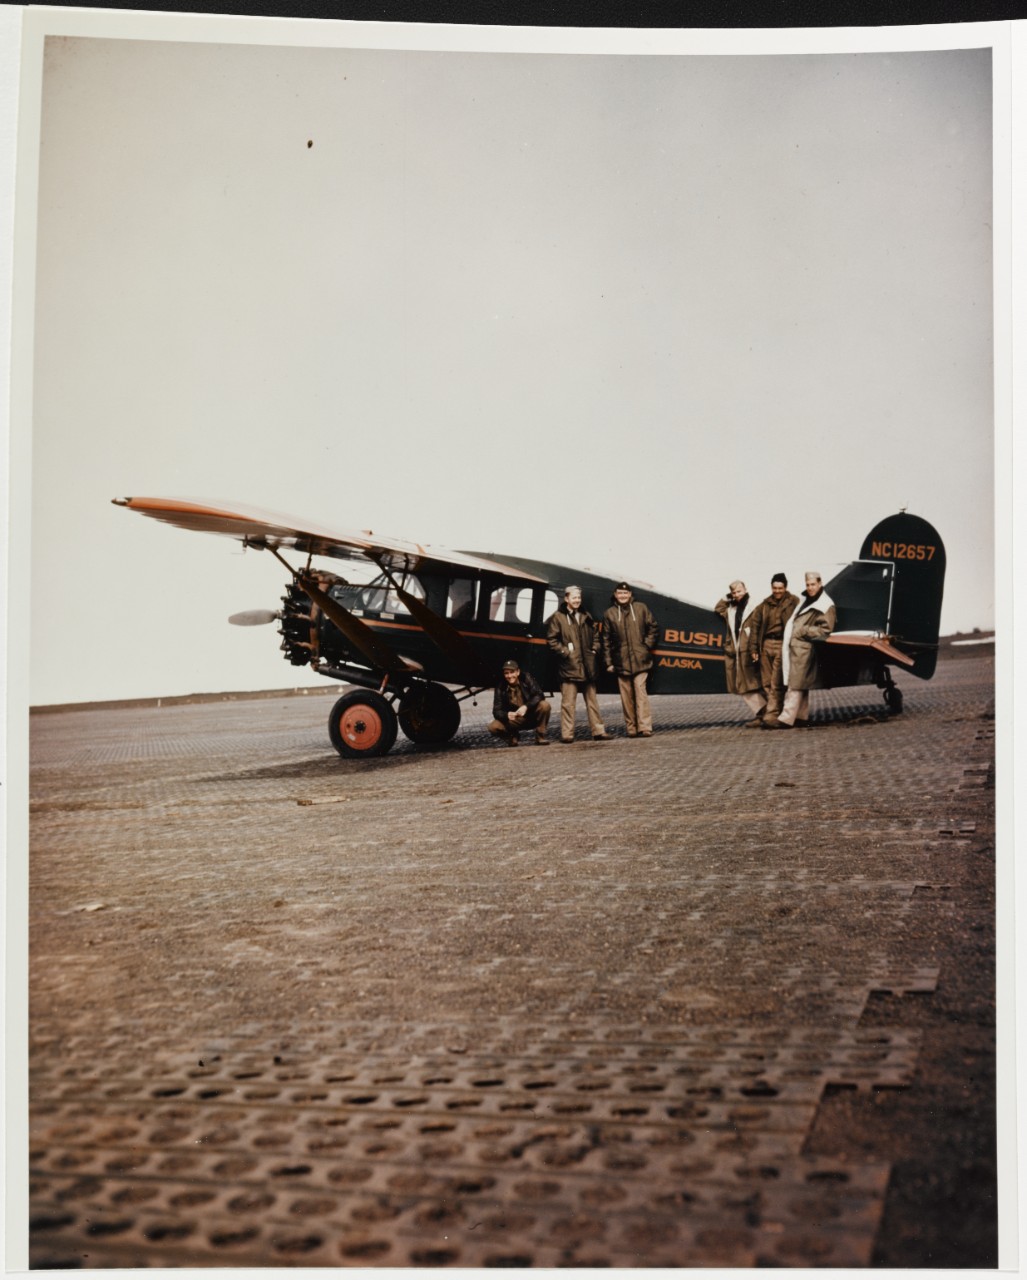 Bellance SKYROCKET Civilian "Bush" Transport Aircraft at an Alaska airfield